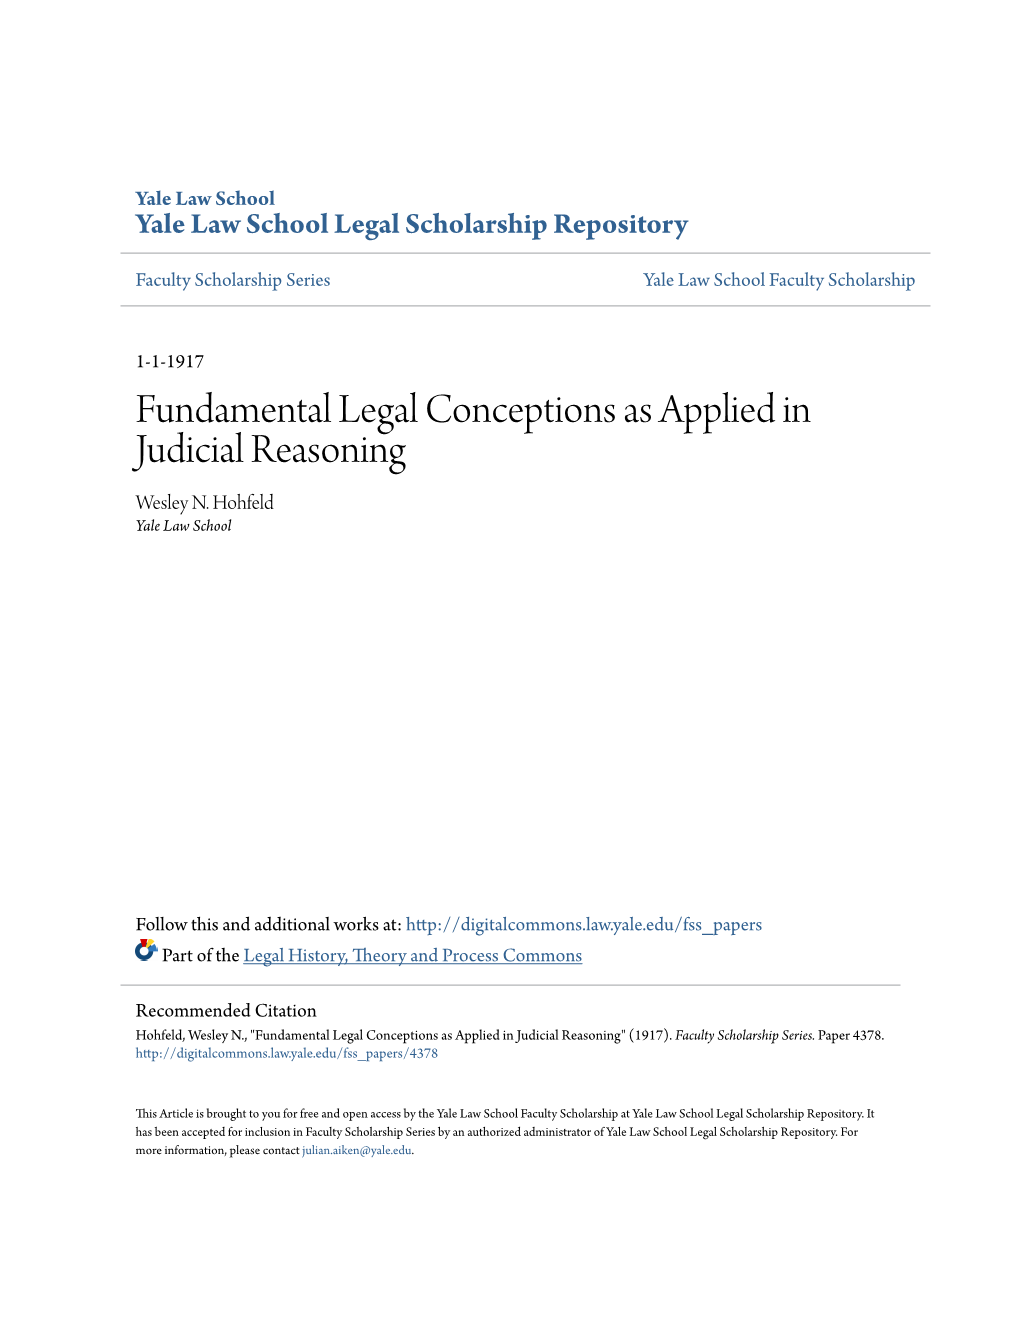 Fundamental Legal Conceptions As Applied in Judicial Reasoning Wesley N